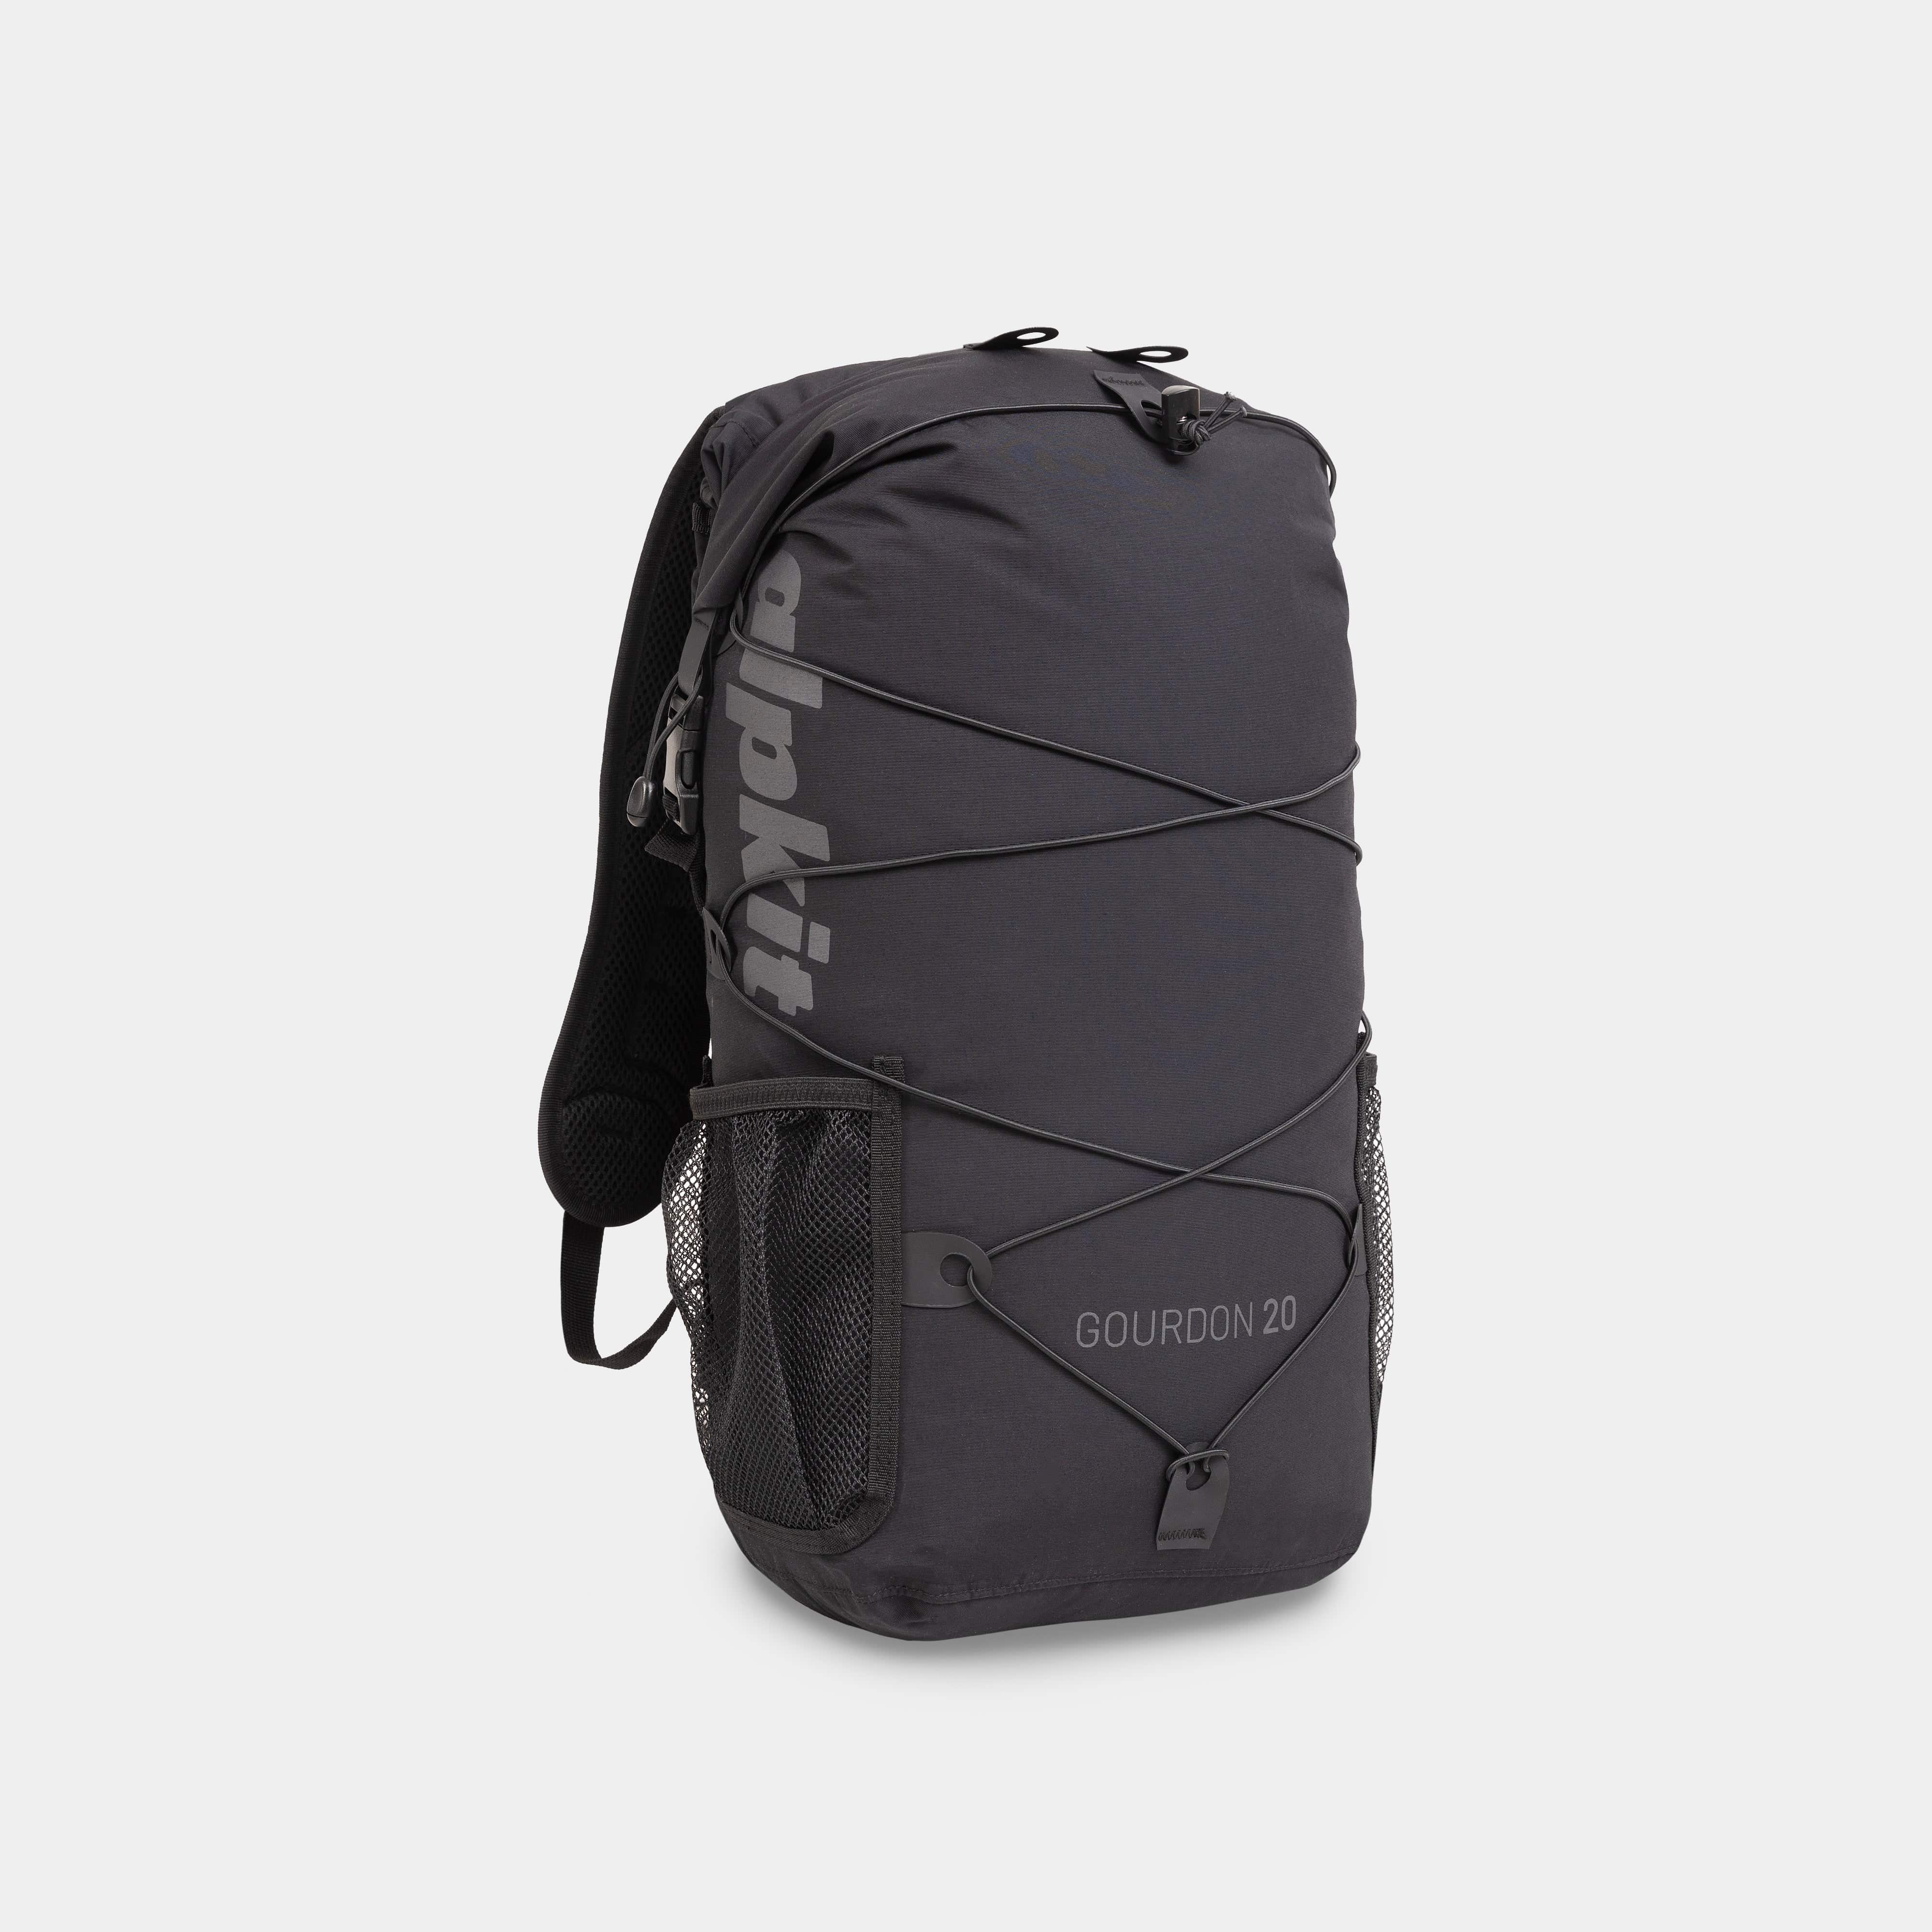 alpkit Gourdon 20 dry bag backpack in black